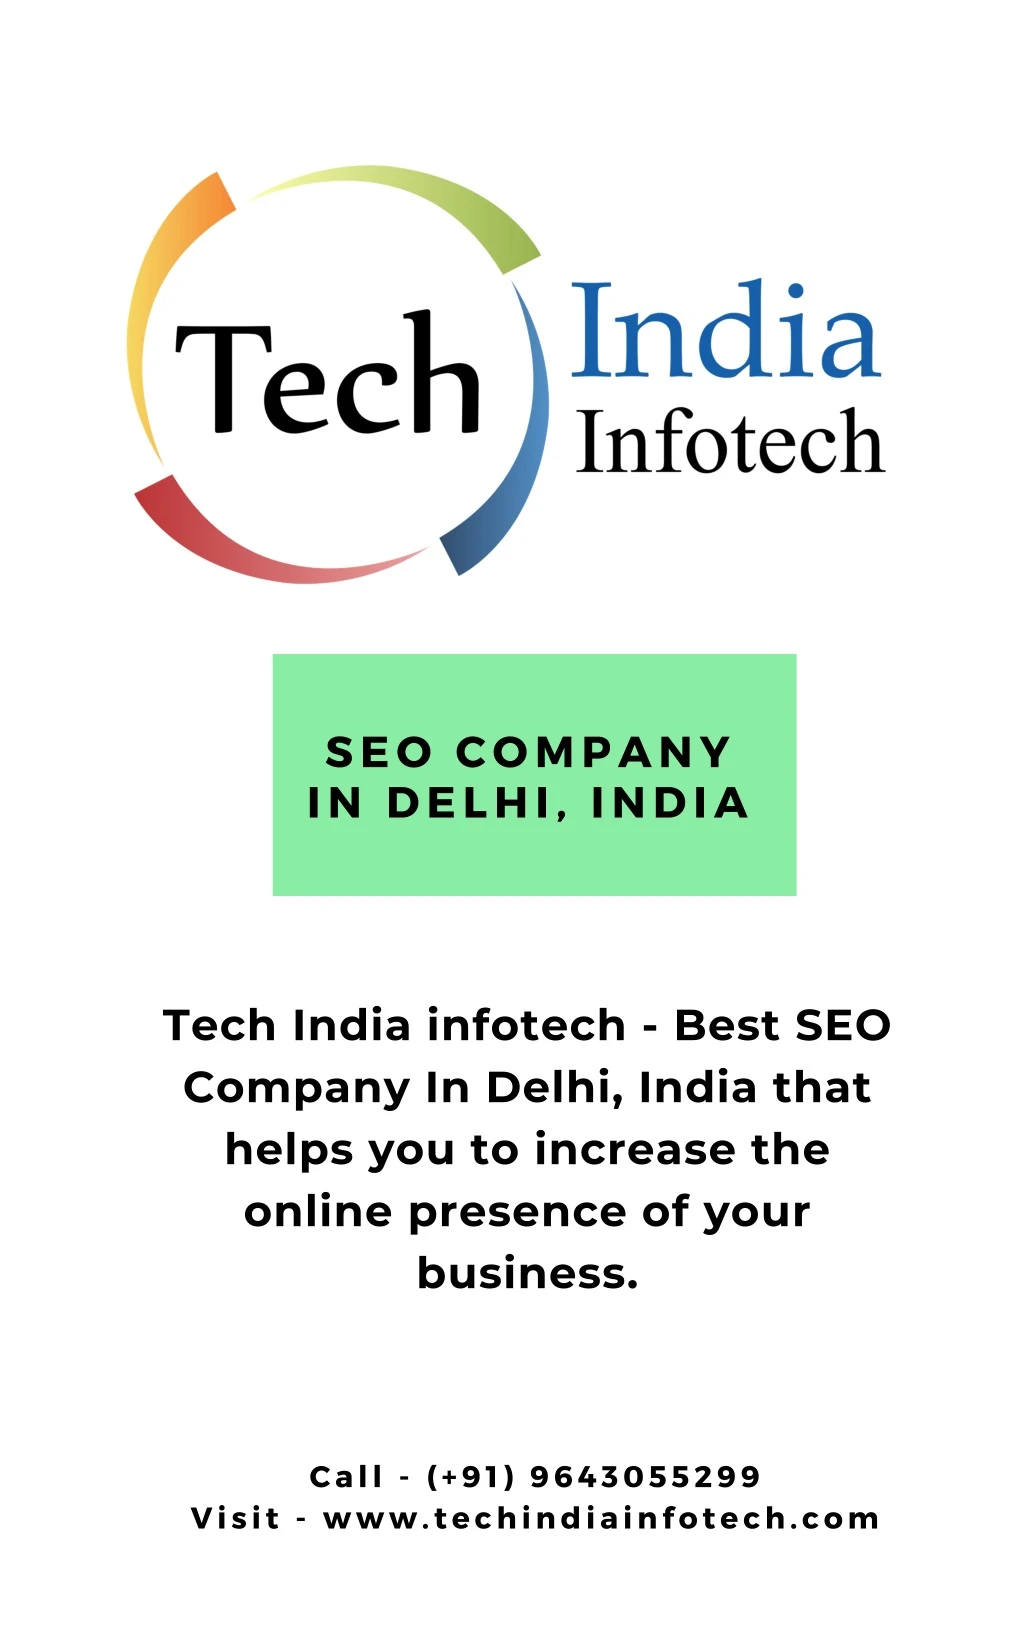 seo company in delhi india